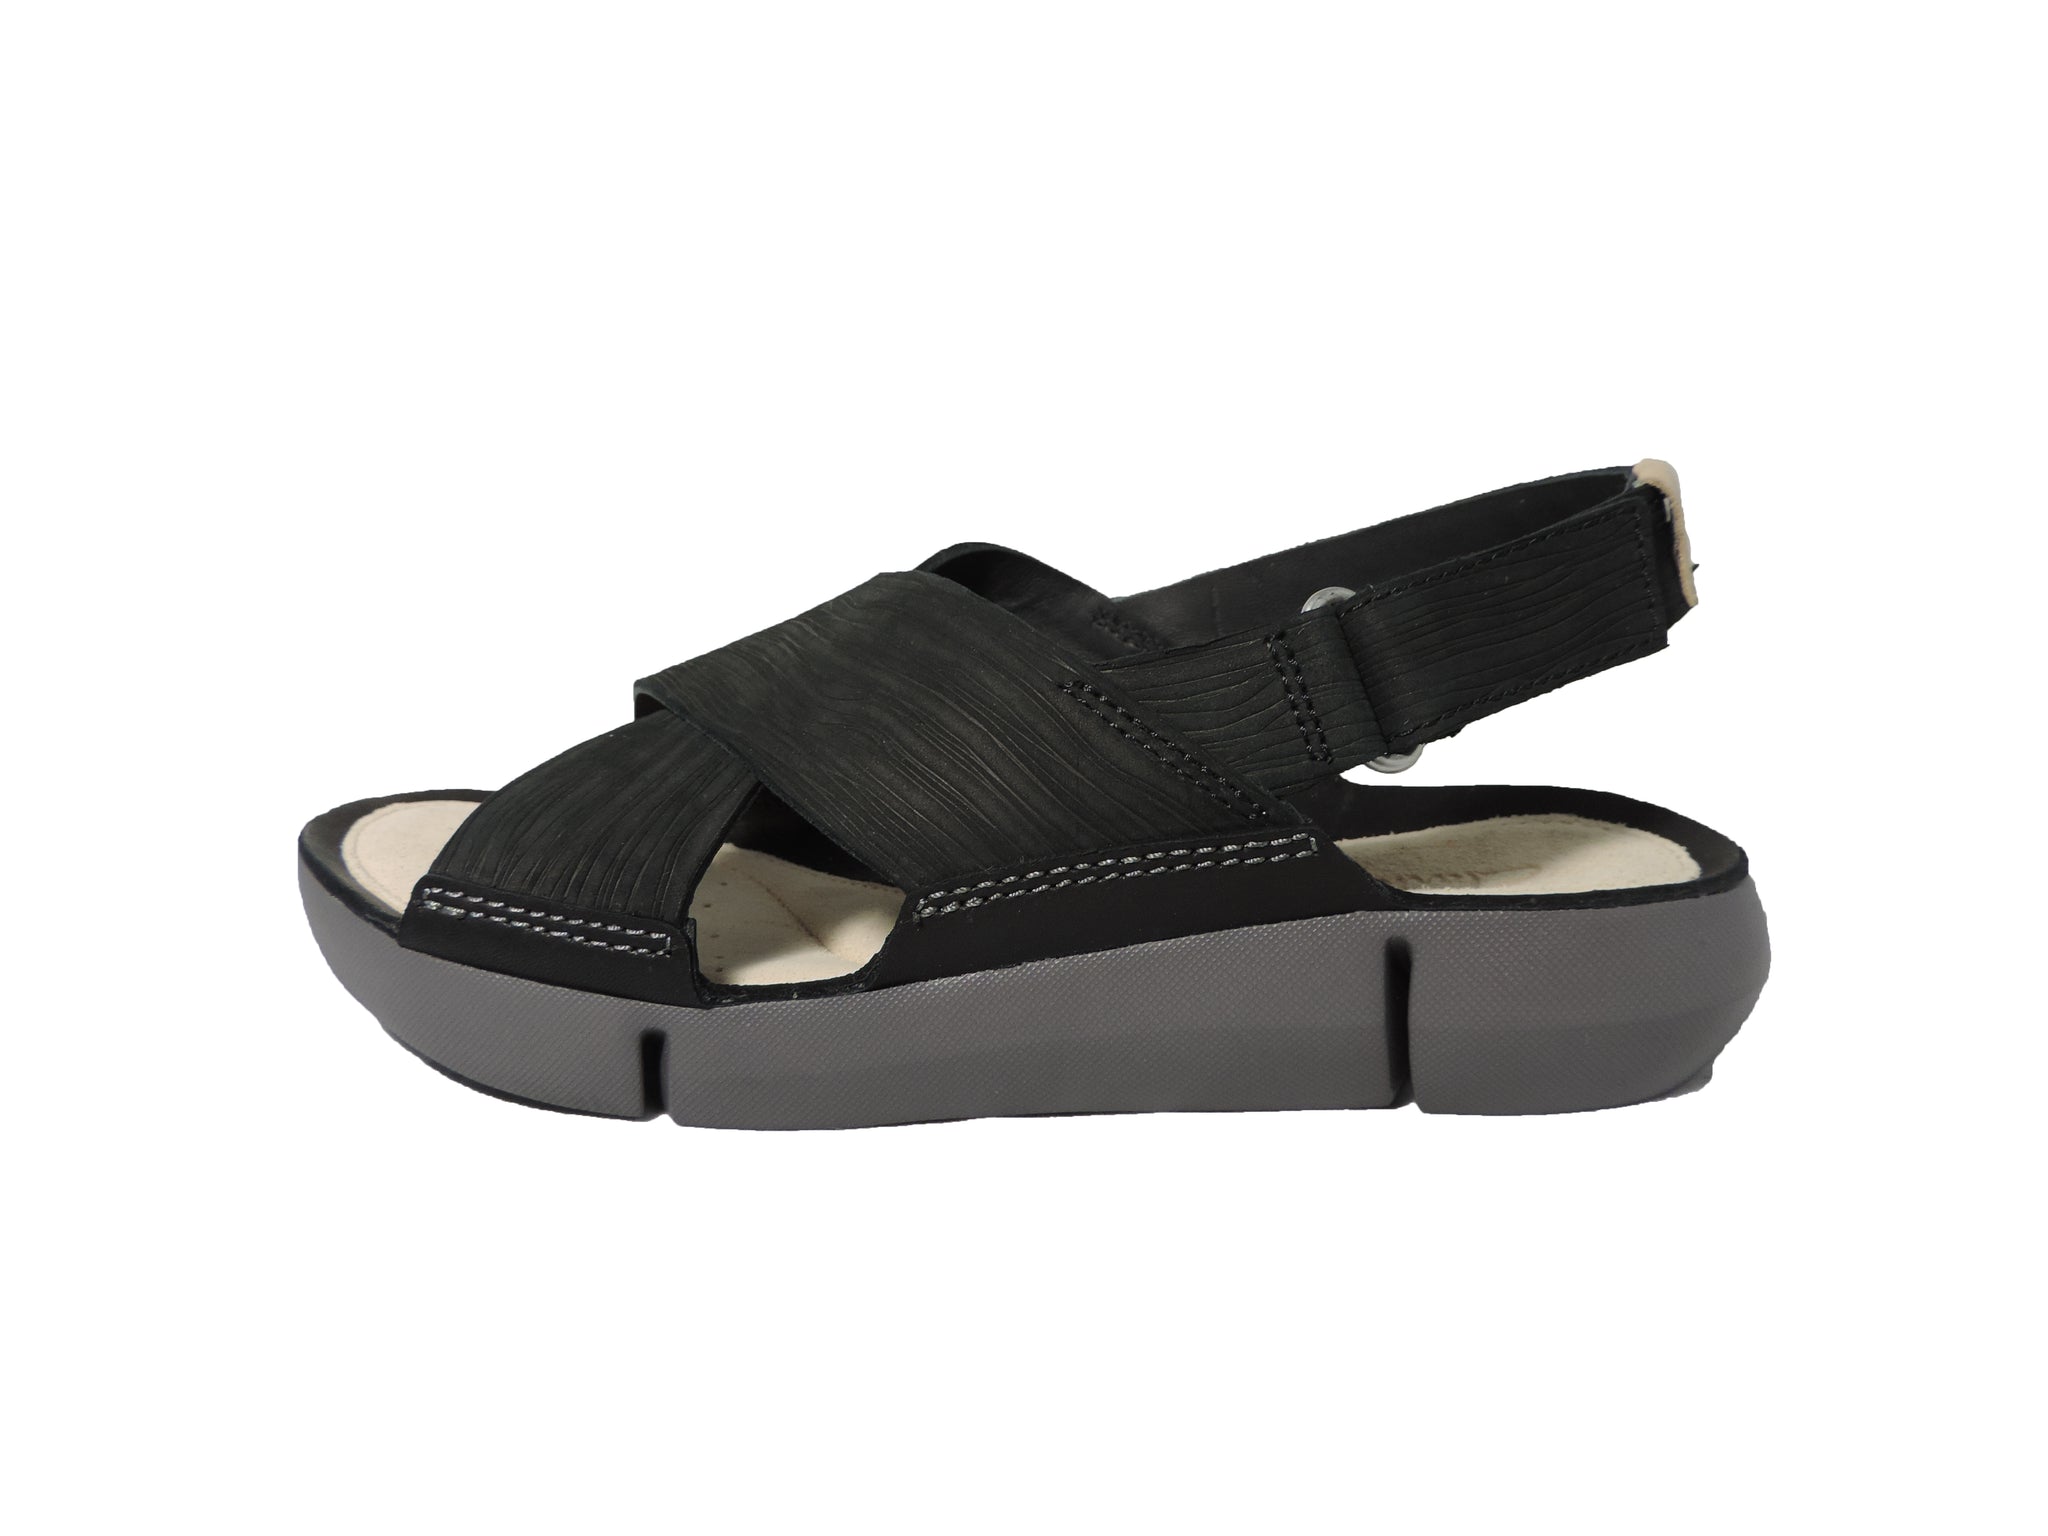 Clarks Tri Chloe Women's Leather Sandal – Got Your Shoes